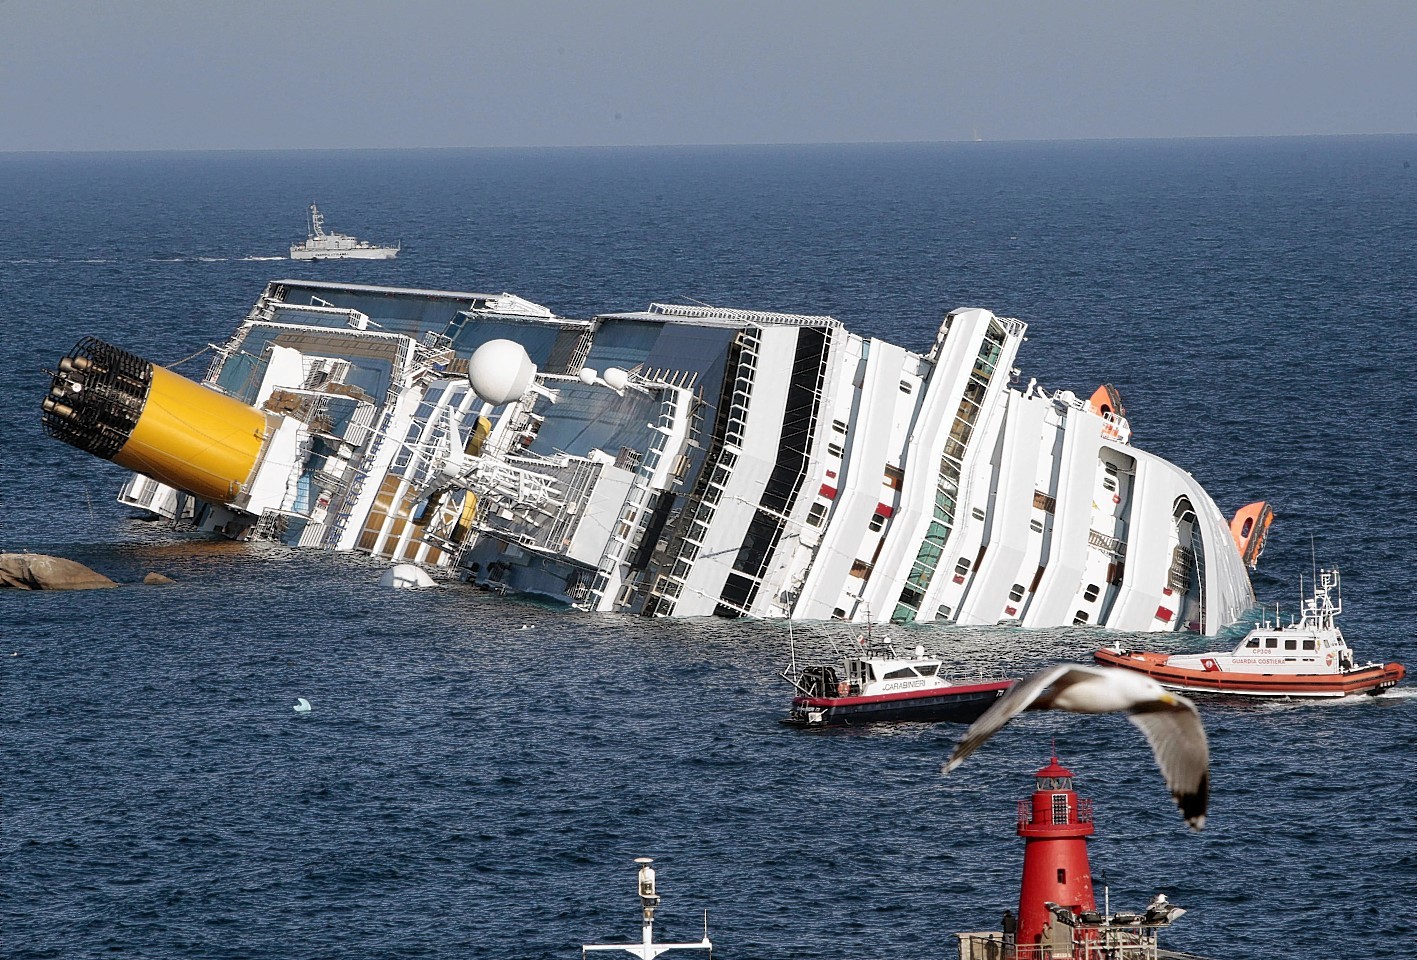 The overturned Costa Concordia